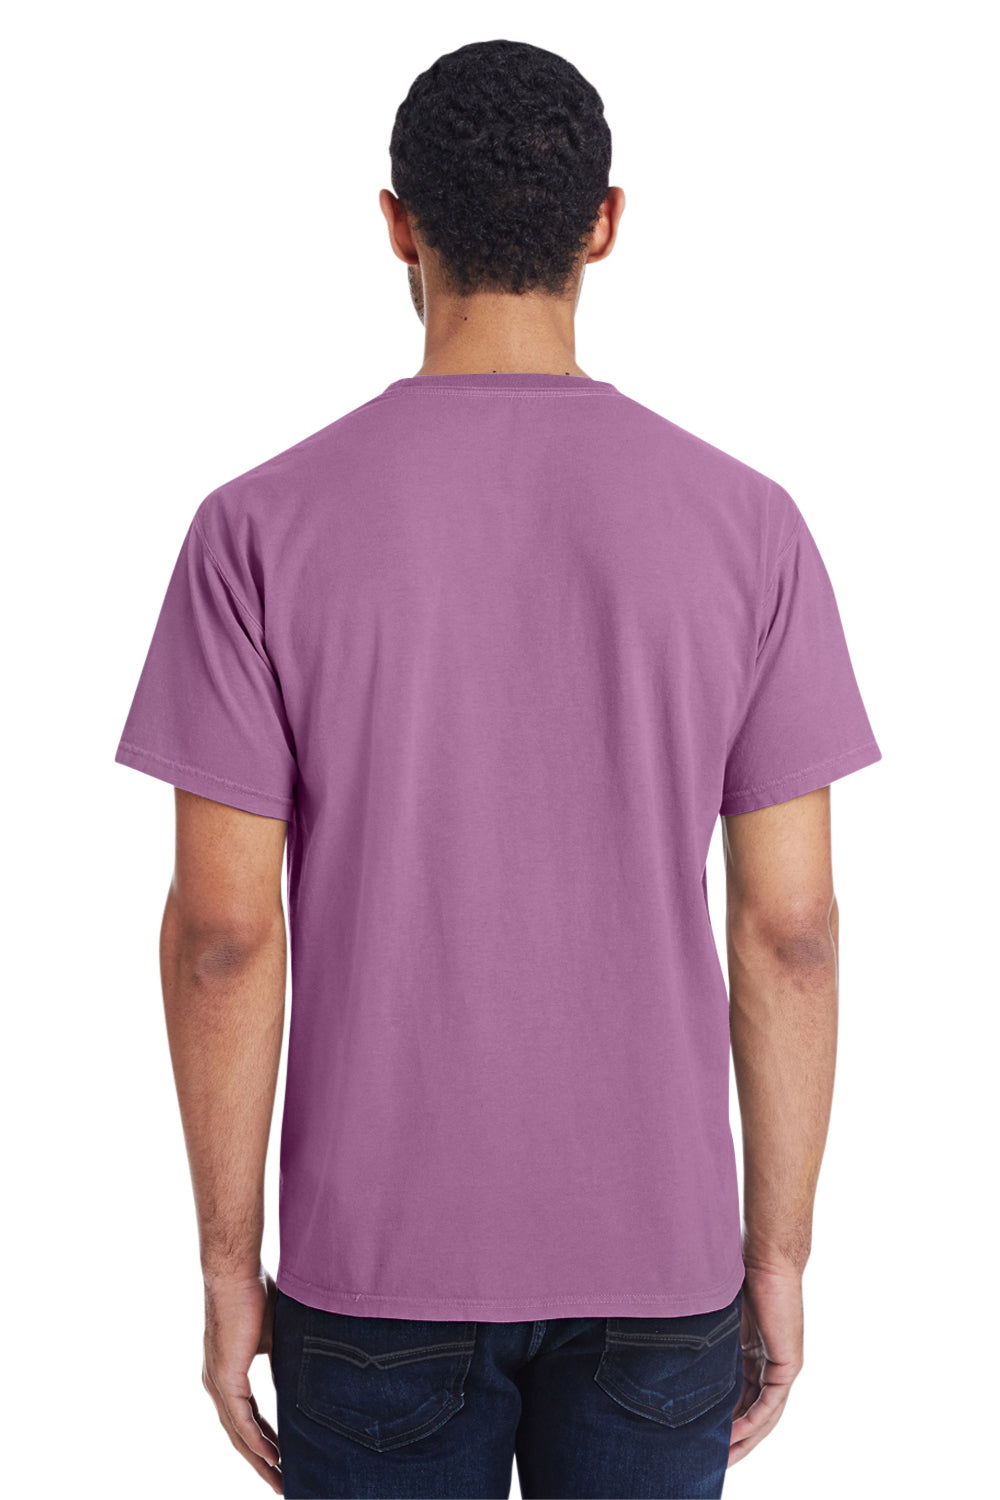 ComfortWash By Hanes GDH150 Mens Short Sleeve Crewneck T-Shirt w/ Pocket Plum Purple Back